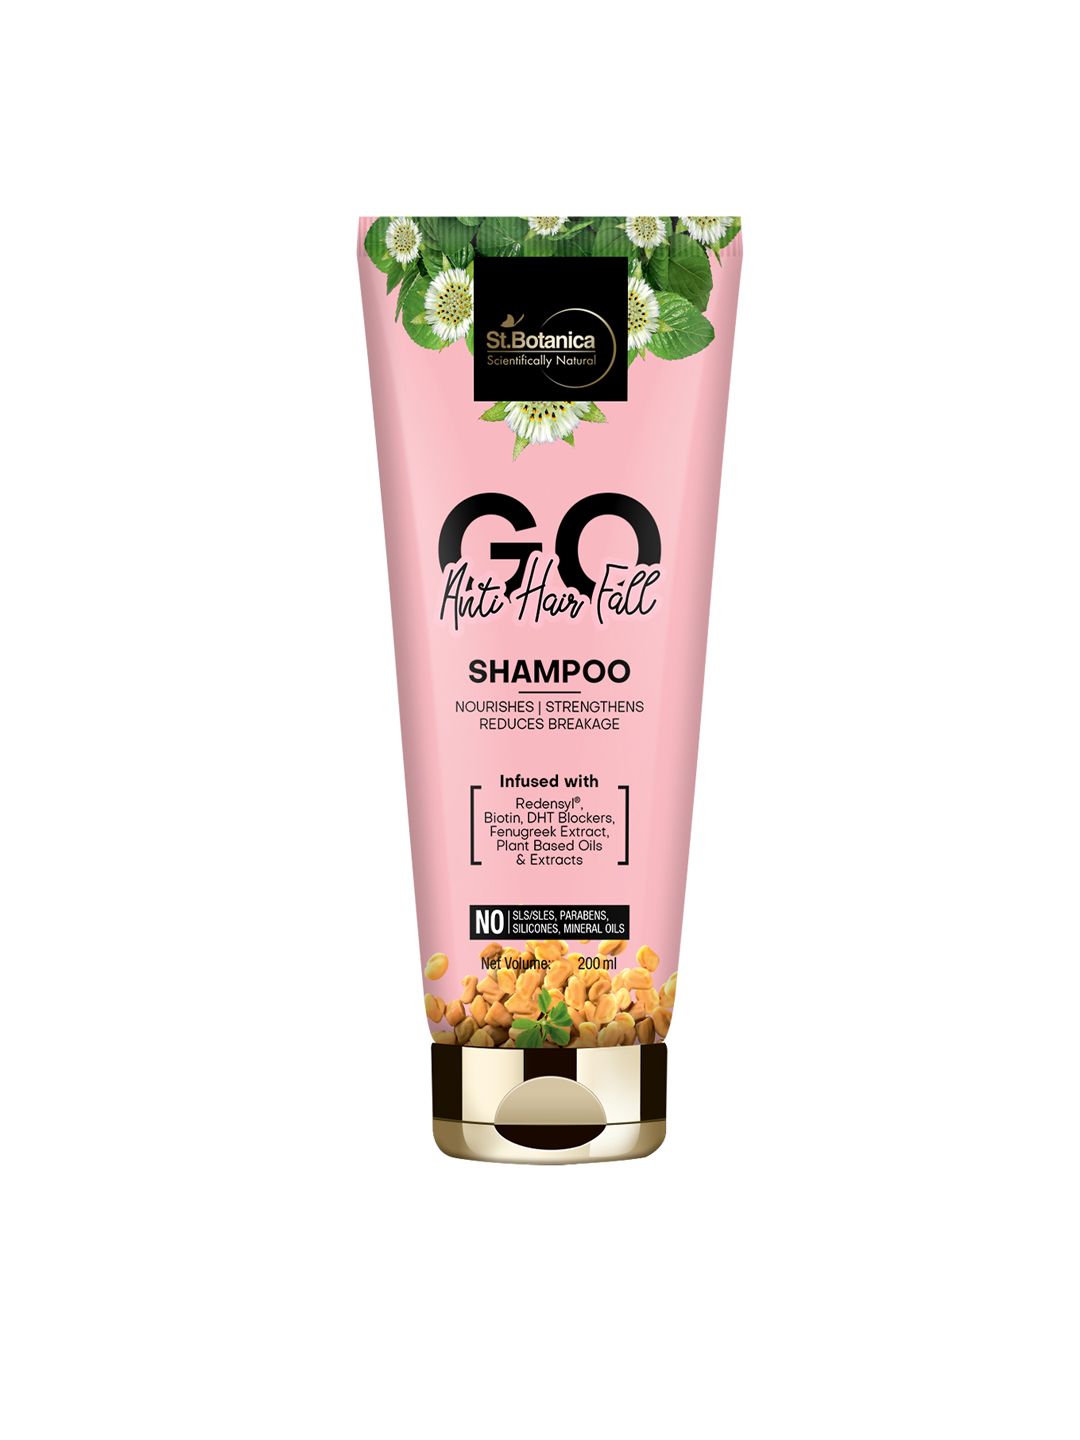 StBotanica Go Anti Hair Fall Shampoo 200ml Price in India